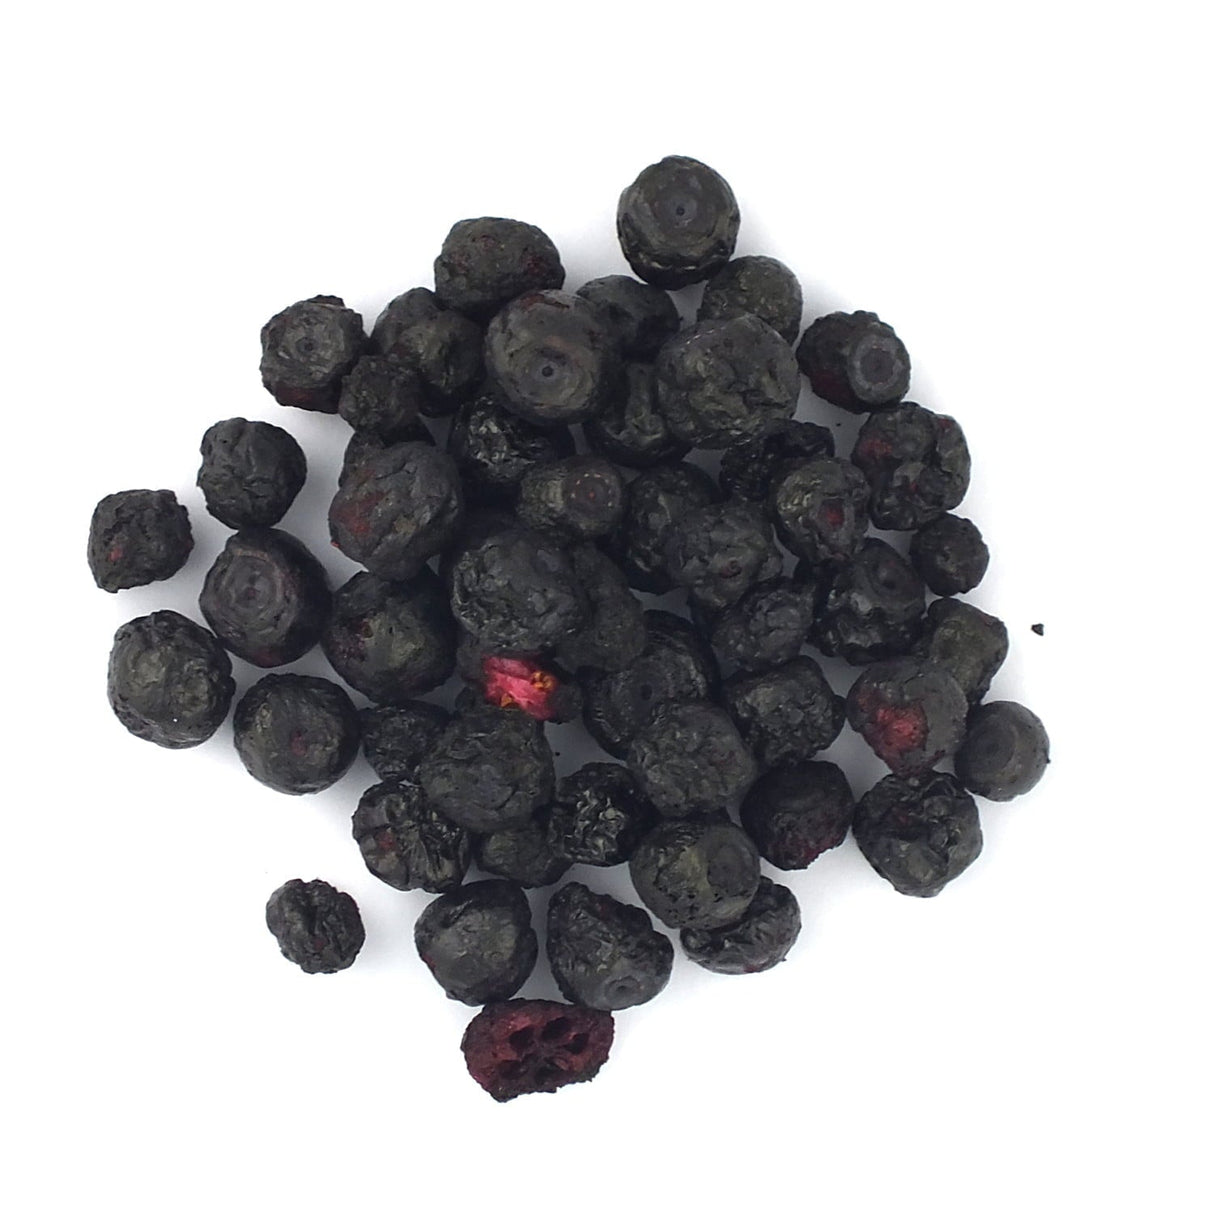 Freeze Dried Wild Blueberries